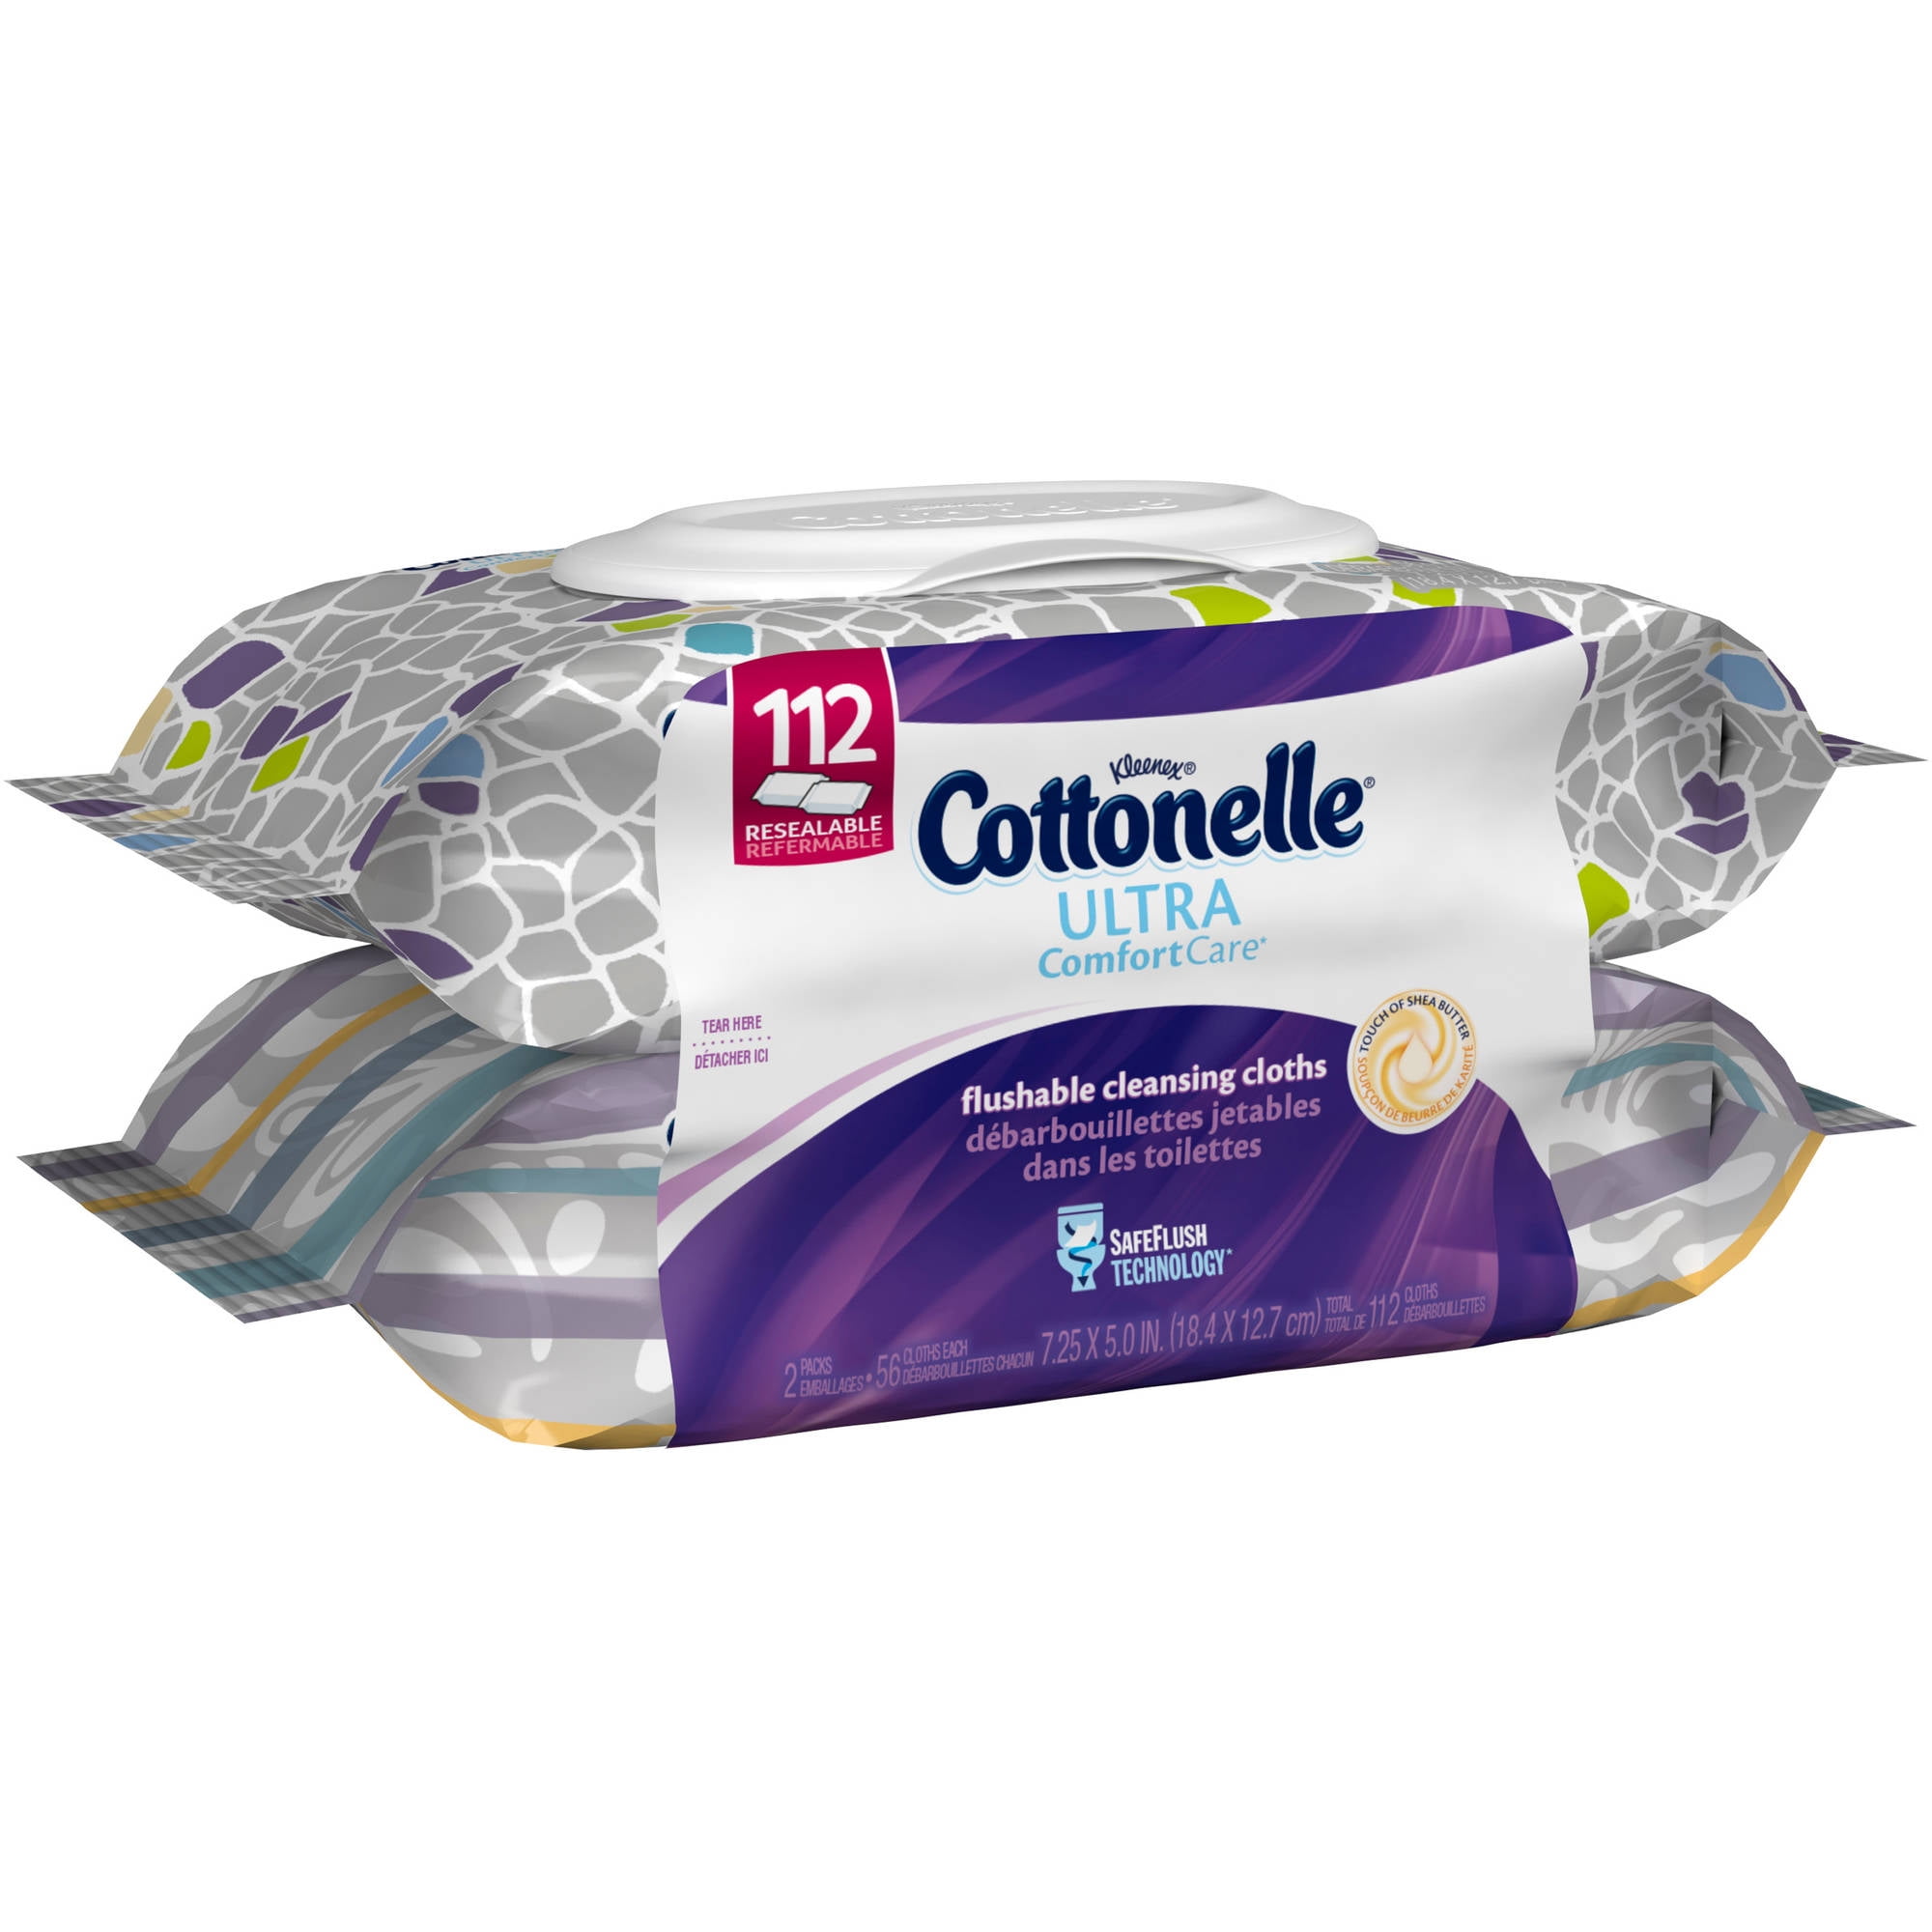 Cottonelle Ultra Comfort Care, Flushable Cleansing Cloths, 112 ...